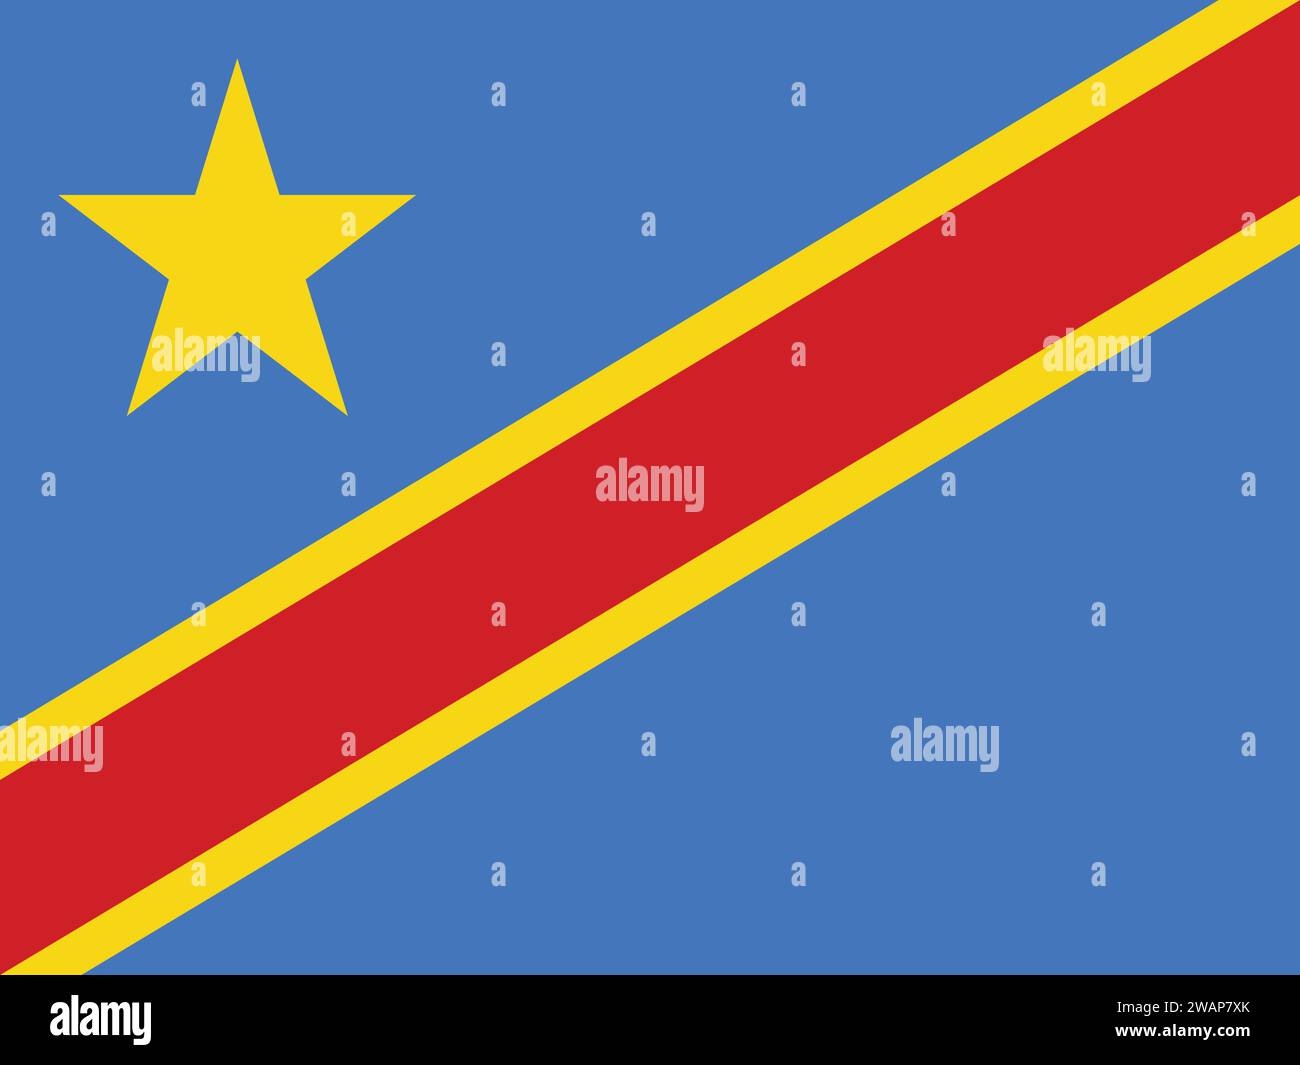 High detailed flag of Congo-Kinshasa. National Congo-Kinshasa flag. Africa. 3D illustration. Stock Vector